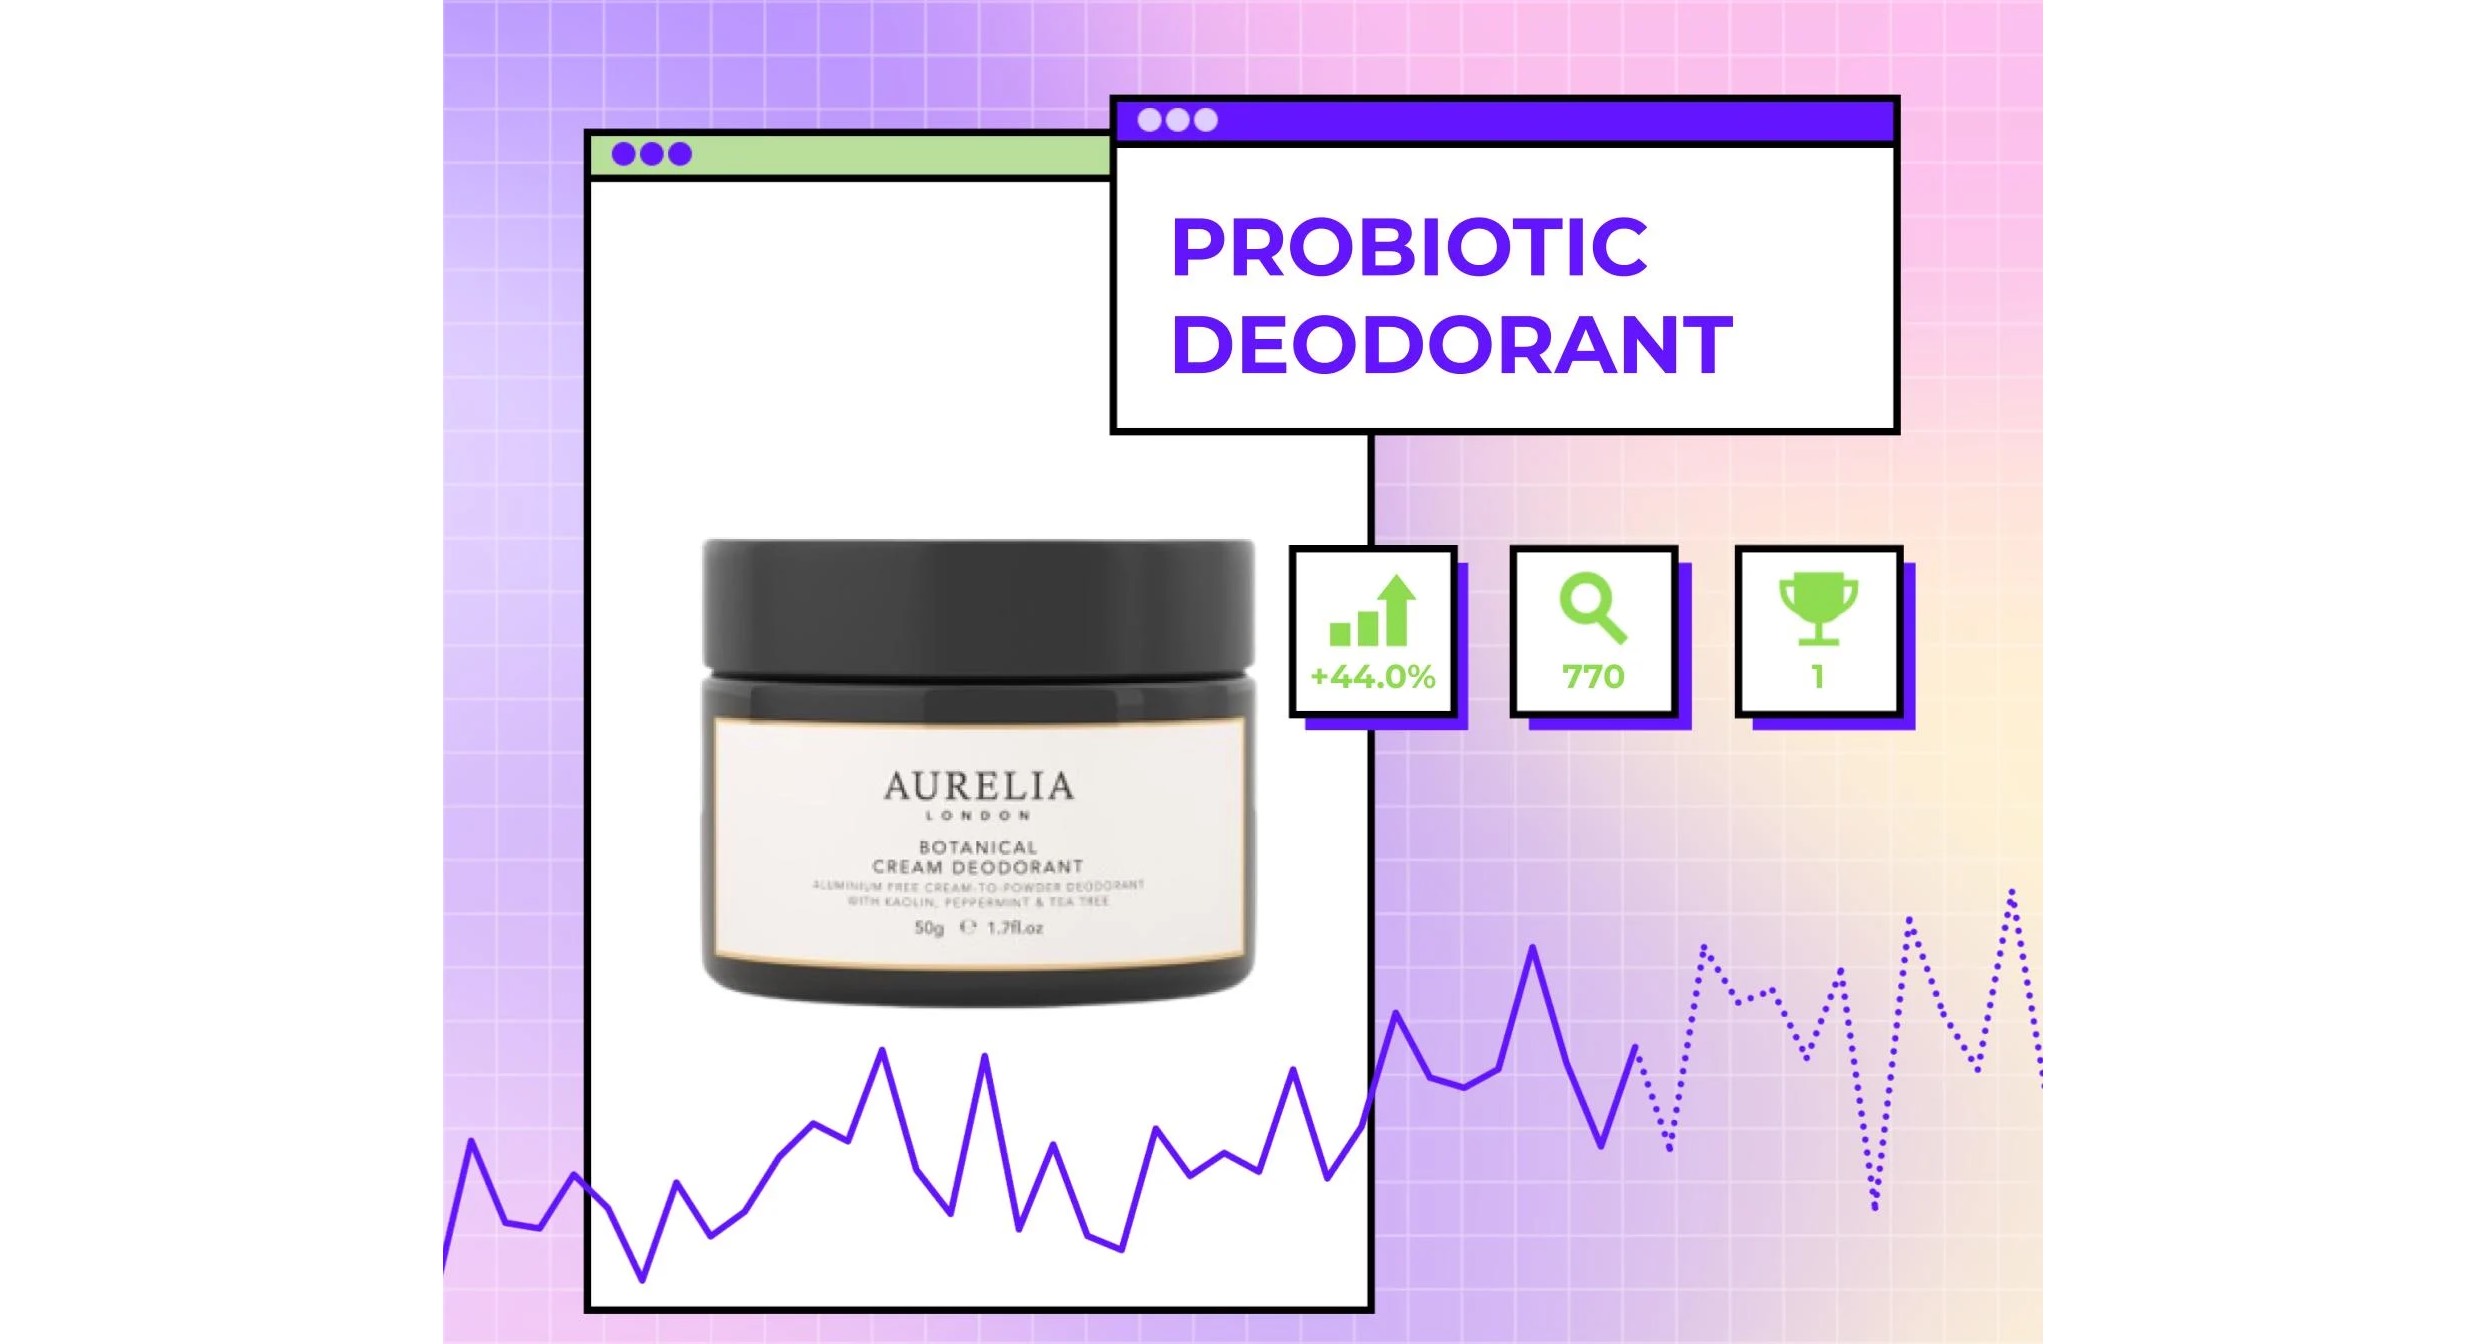 Beauty Trend Alert: Bonding Oil, Nail Art And Probiotic Deodorant High On Consumers’ Radar